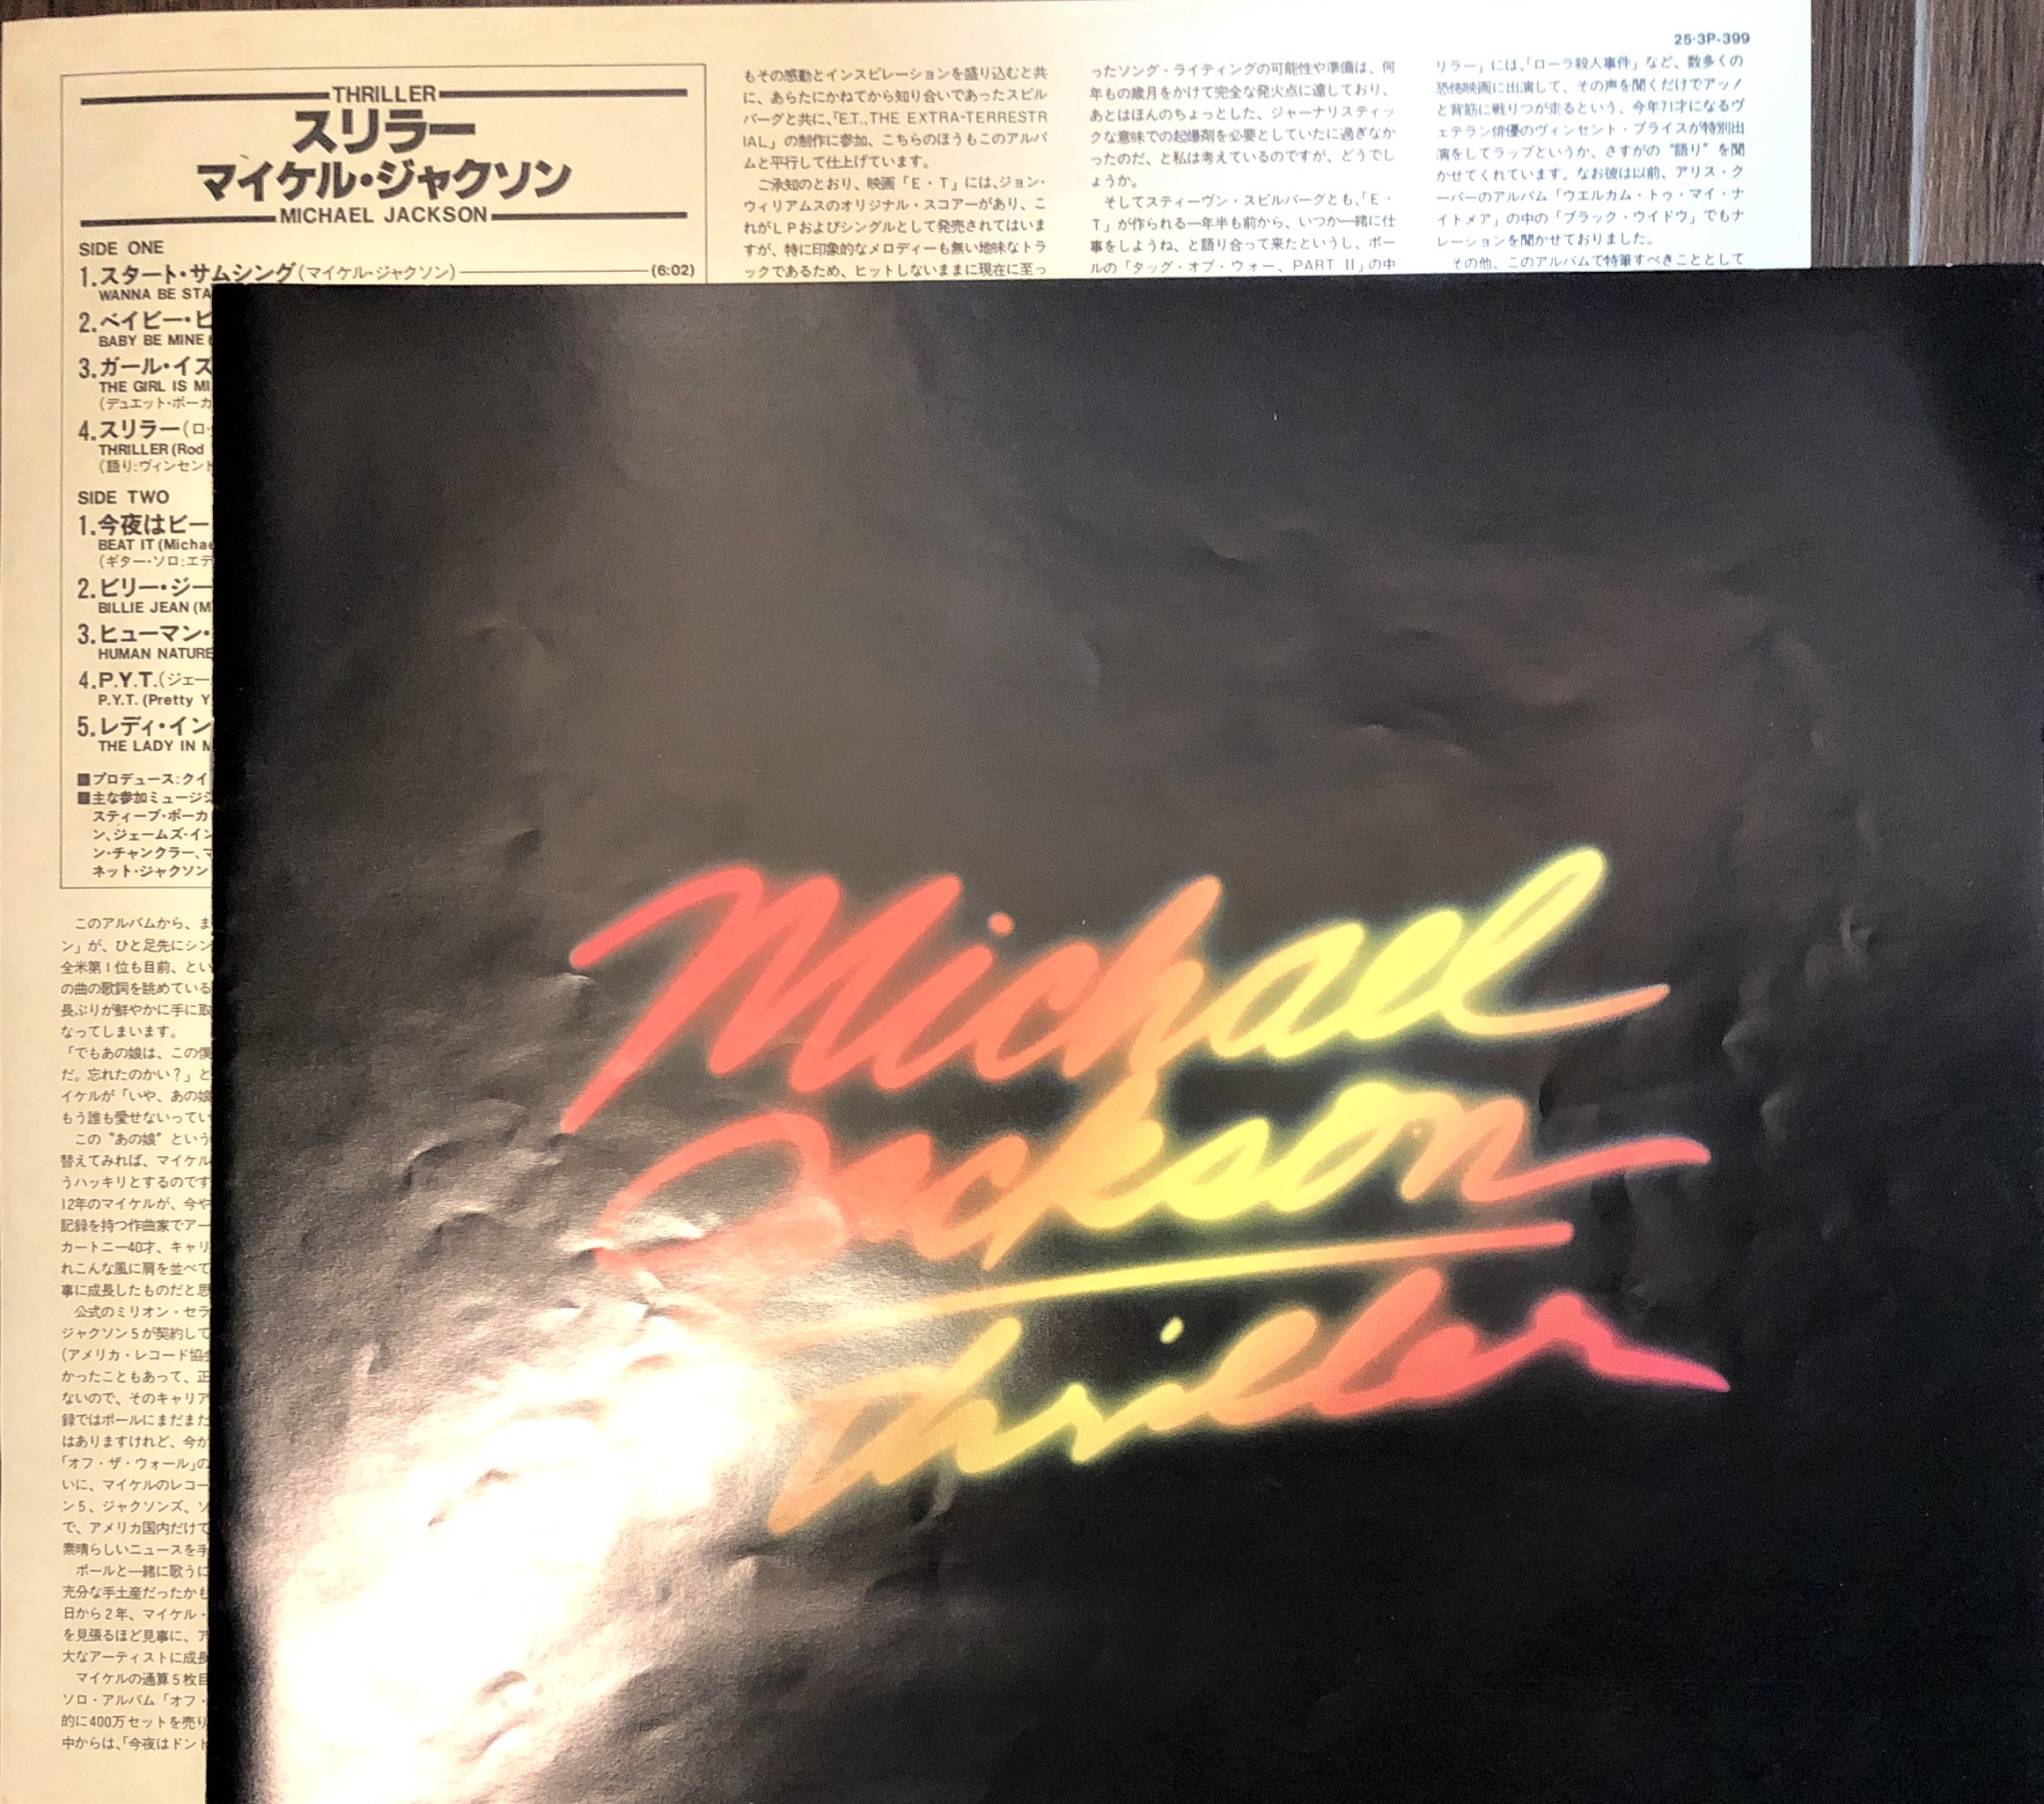 Michael Jackson Thriller 中古レコード通販 買取のアカル レコーズ